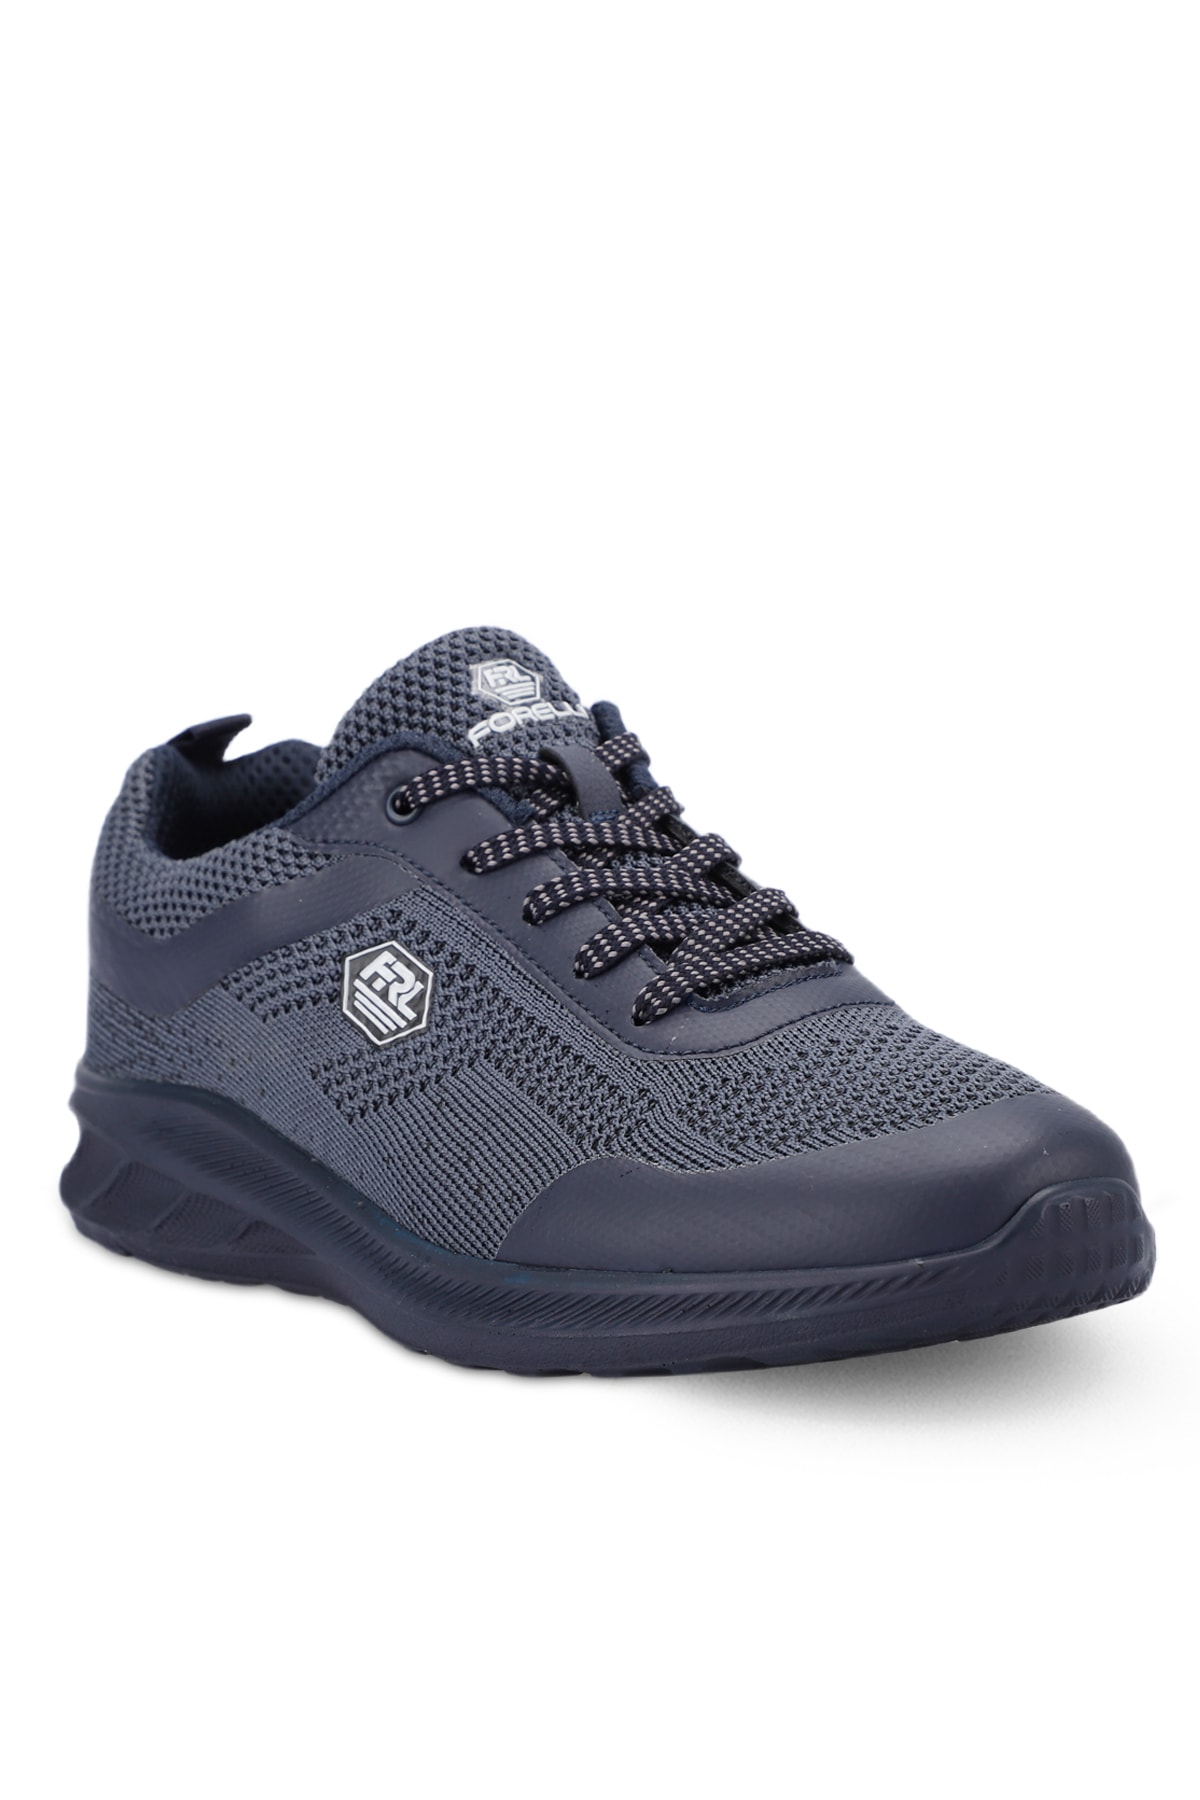 Forelli AXEL-G Sneaker Men's Shoes Navy